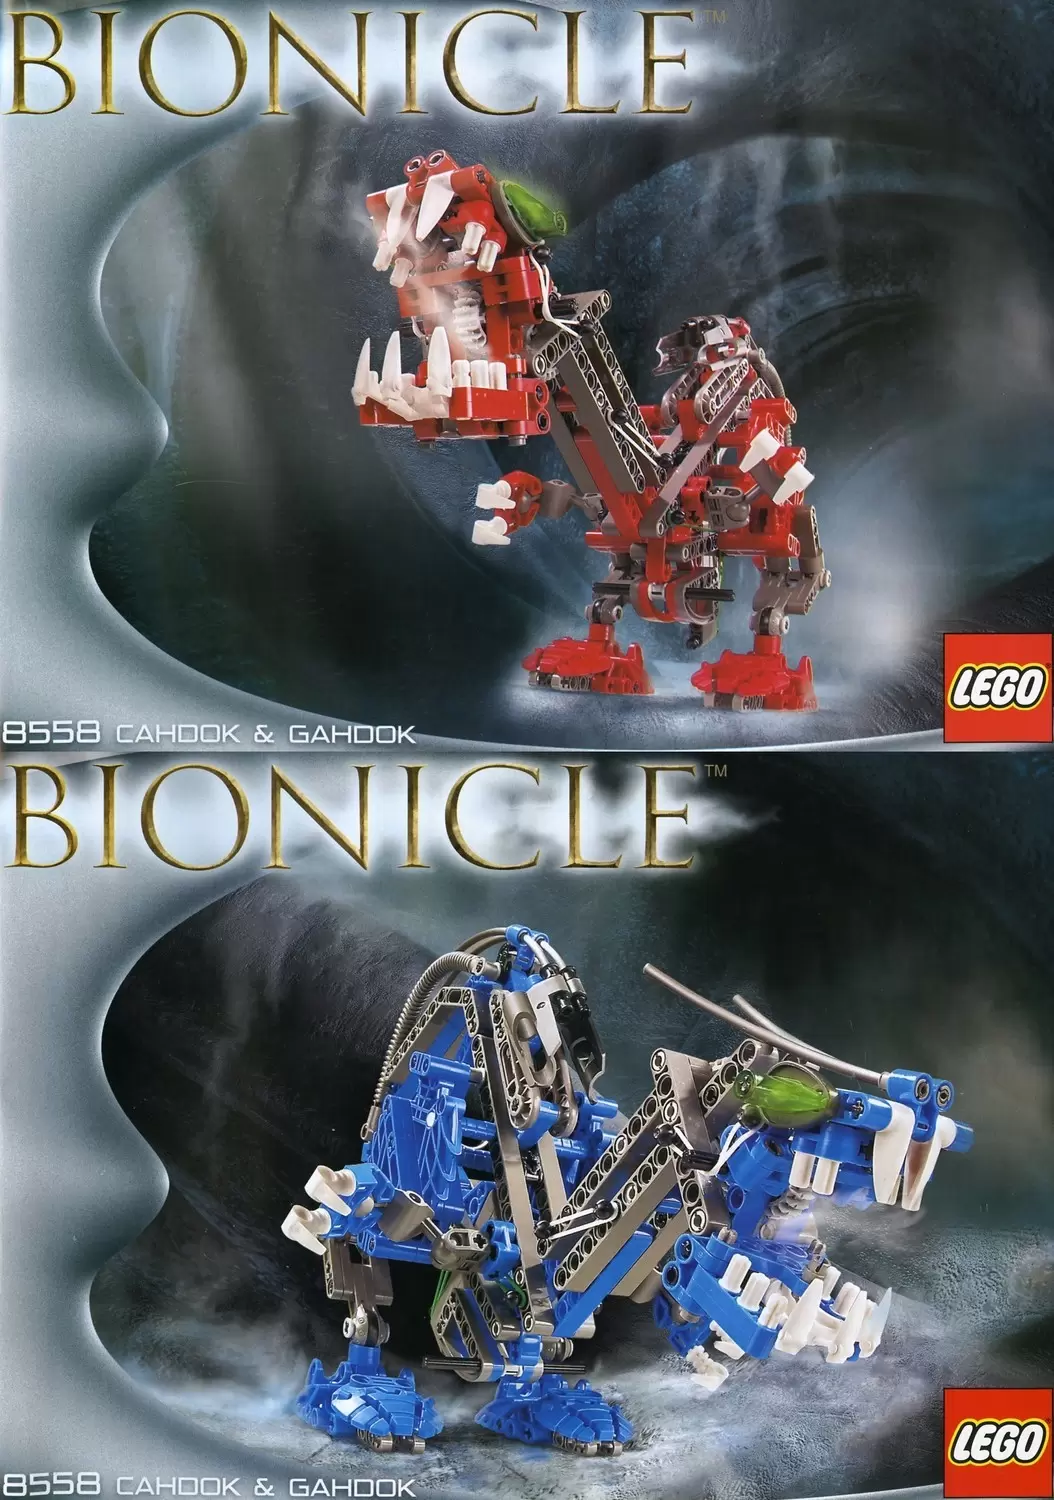 LEGO Bionicle - Cahdok and Gahdok